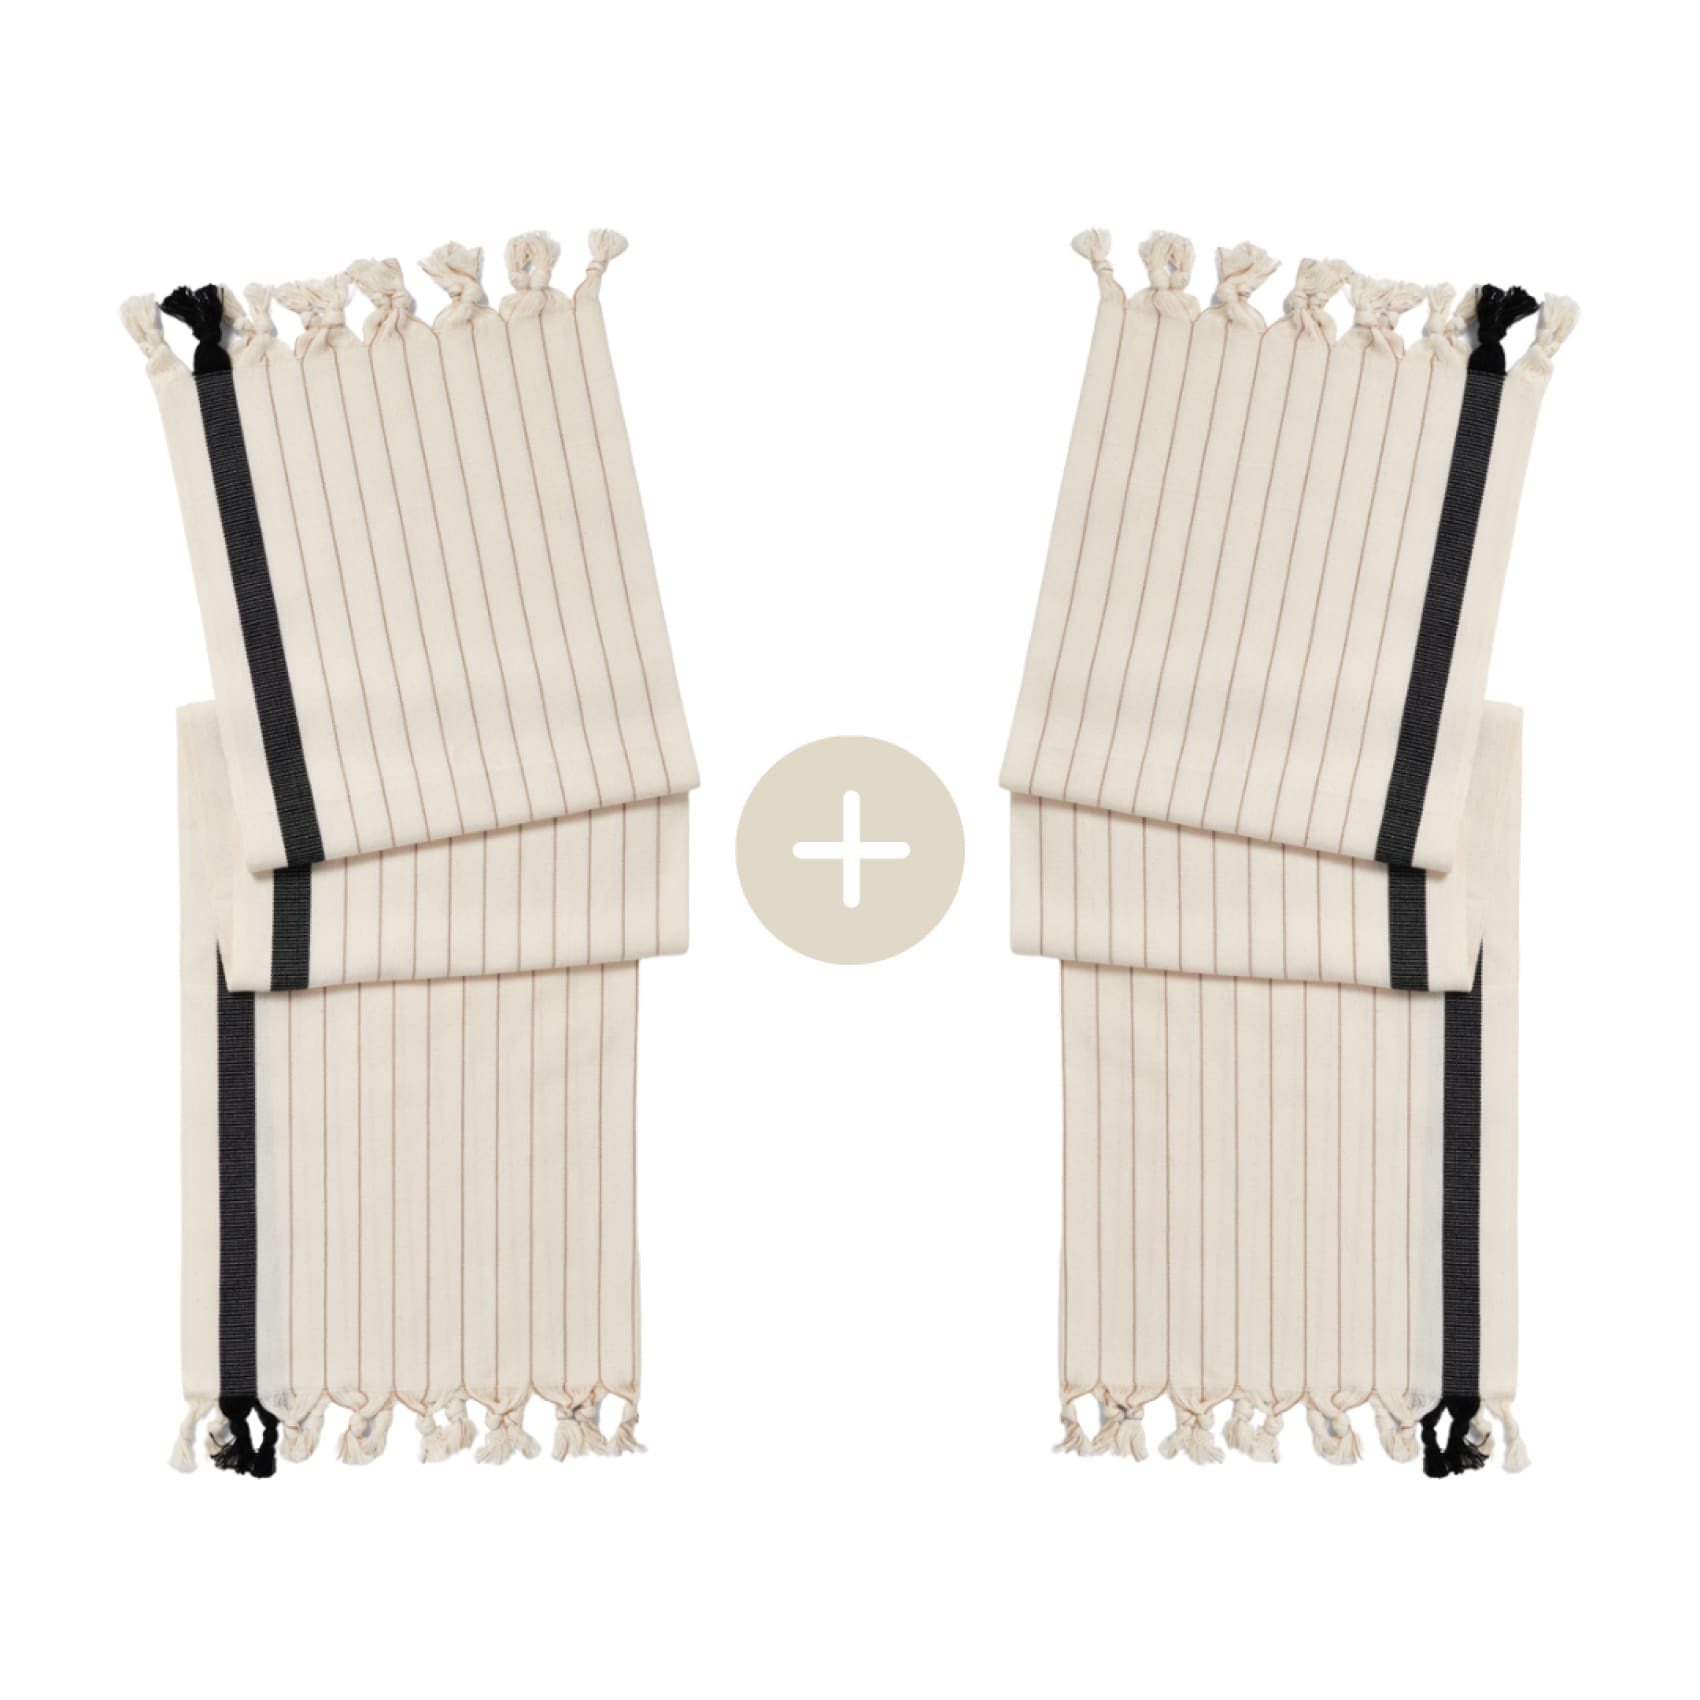 capella-cotton-hand-towel-set-save-5-bundle-bundles-duo-luks-linen-outdoor-furniture-table-584.jpg